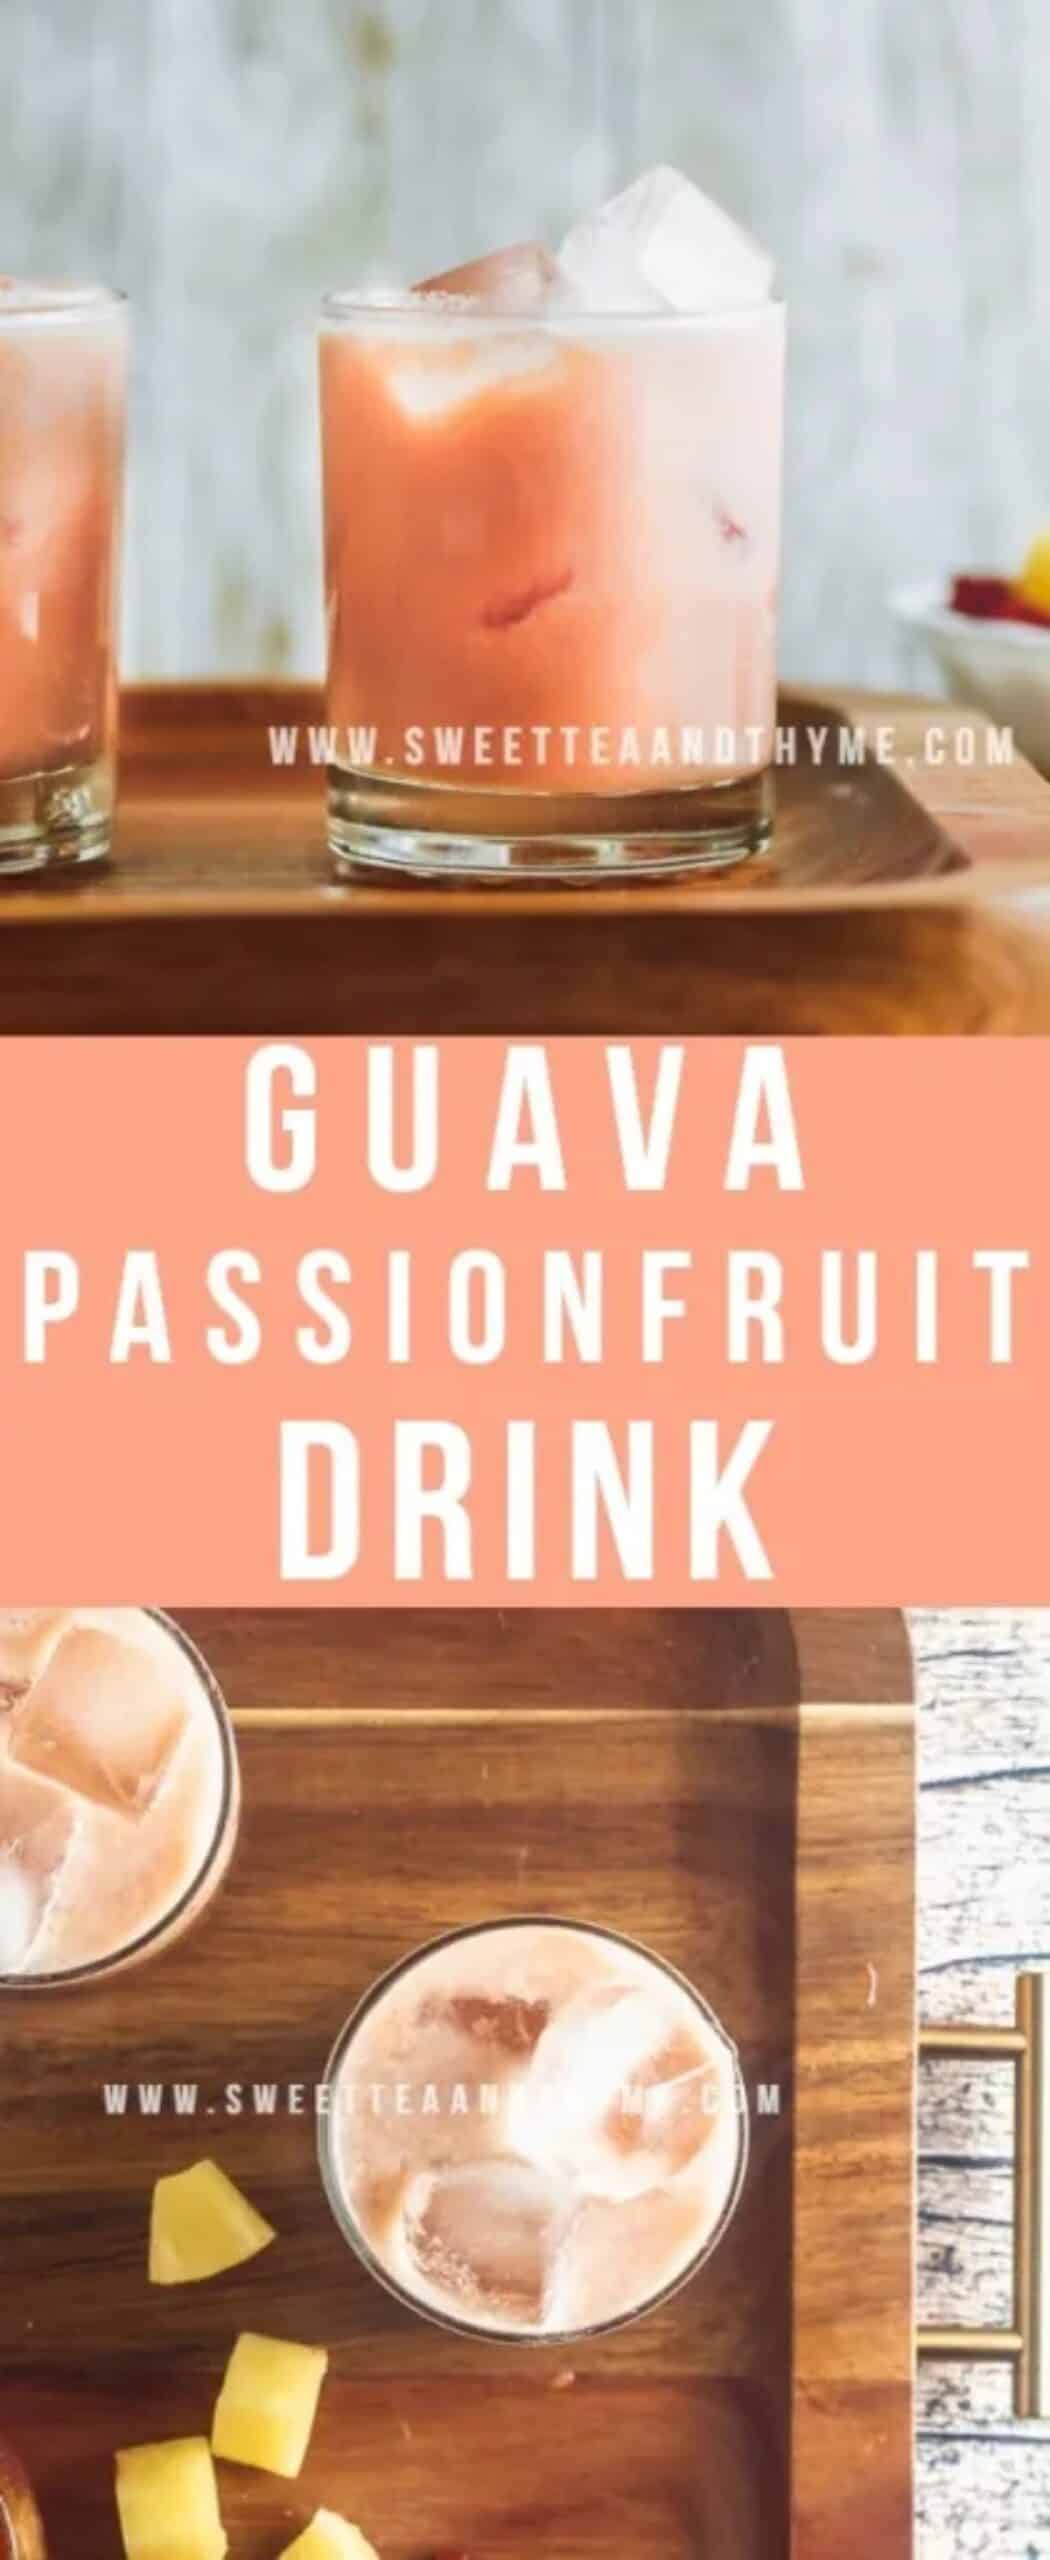 guava passionfrui drink copycat starbucks cold drink recipe